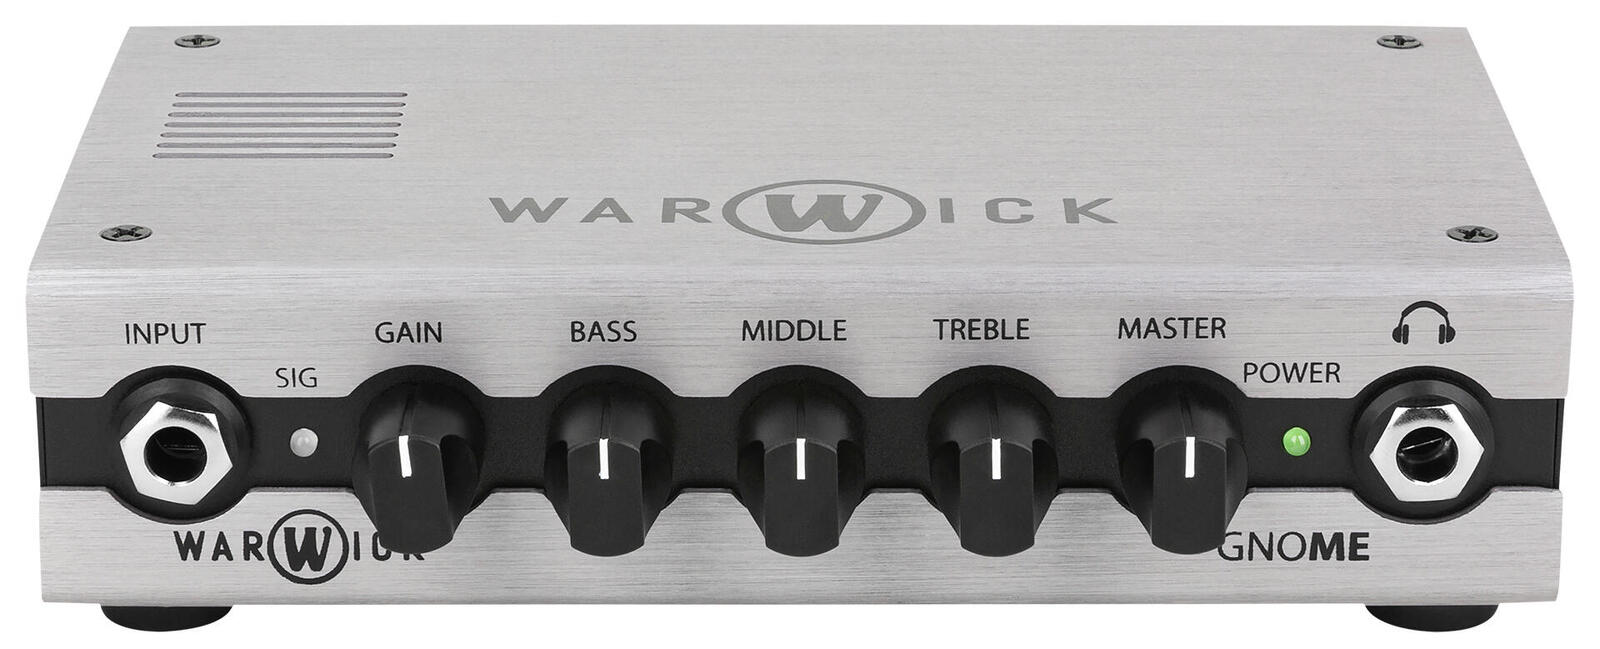 Warwick Gnome 200 Watt